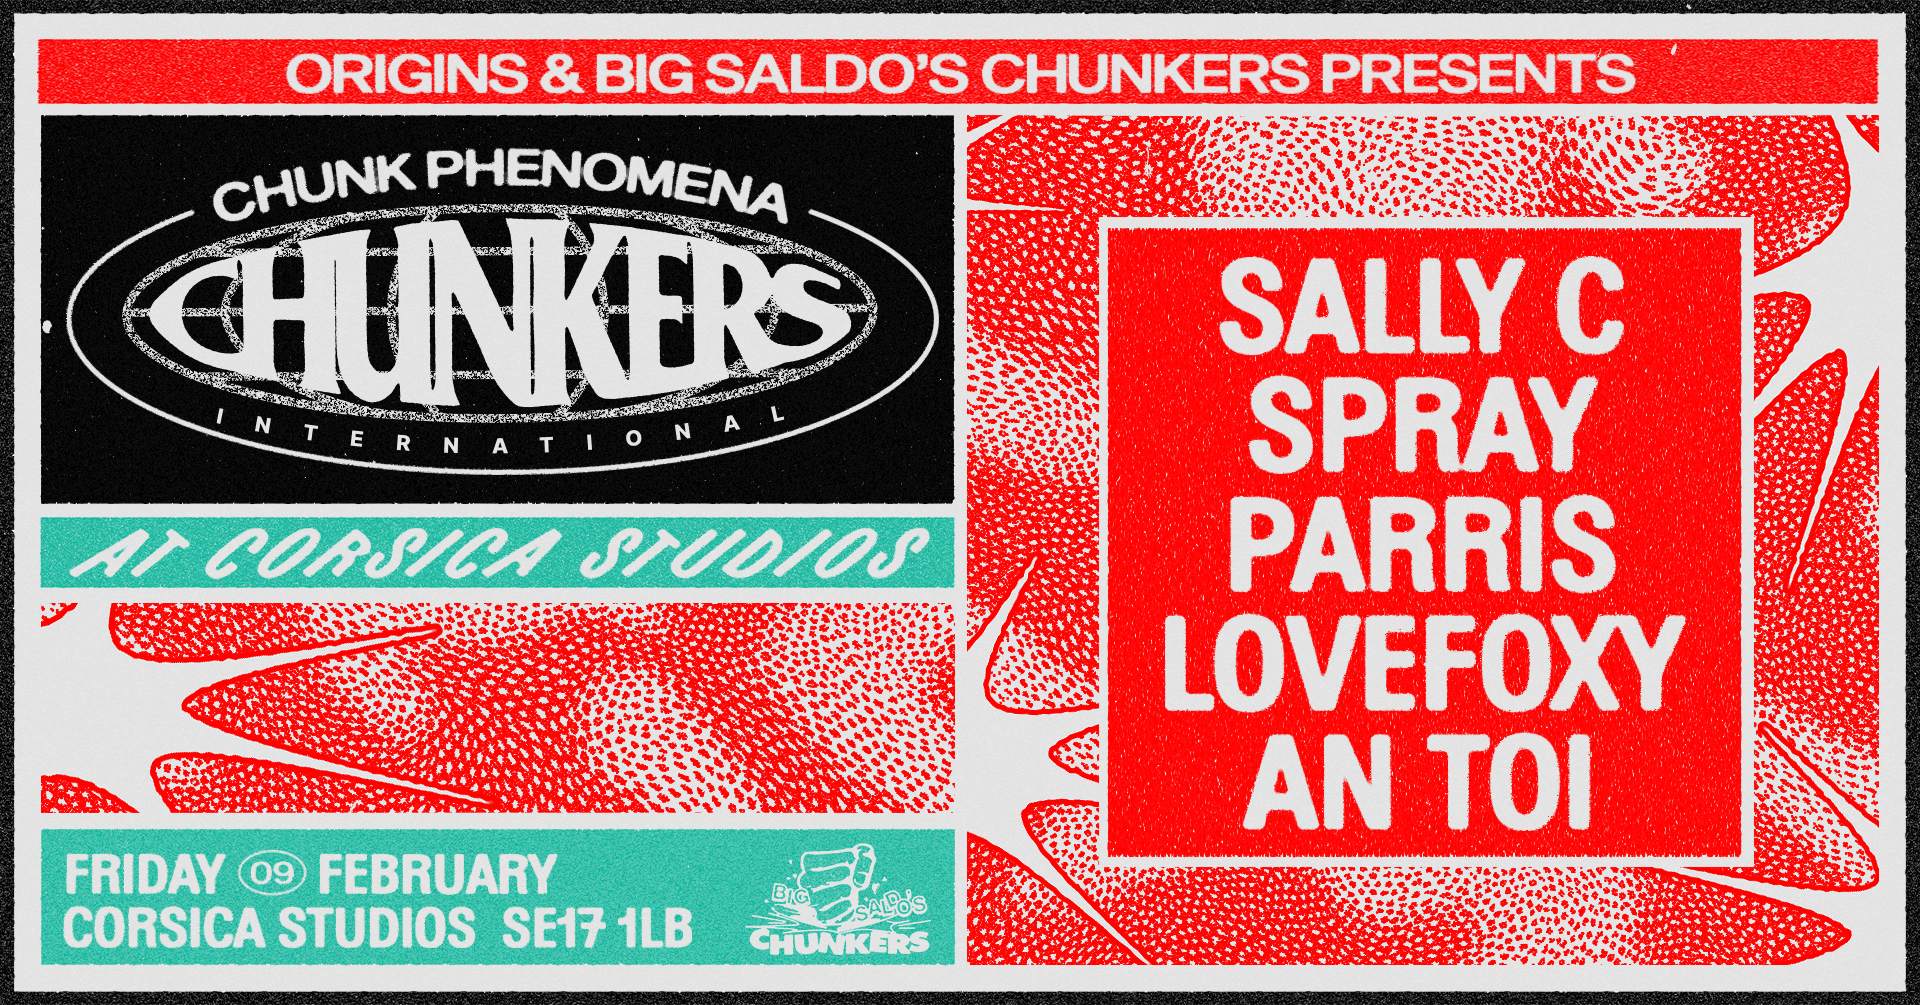 Origins x Big Saldos Chunkers present Chunk Phenomena: Sally C, Spray, Parris, Lovefoxy, An toi - Página frontal